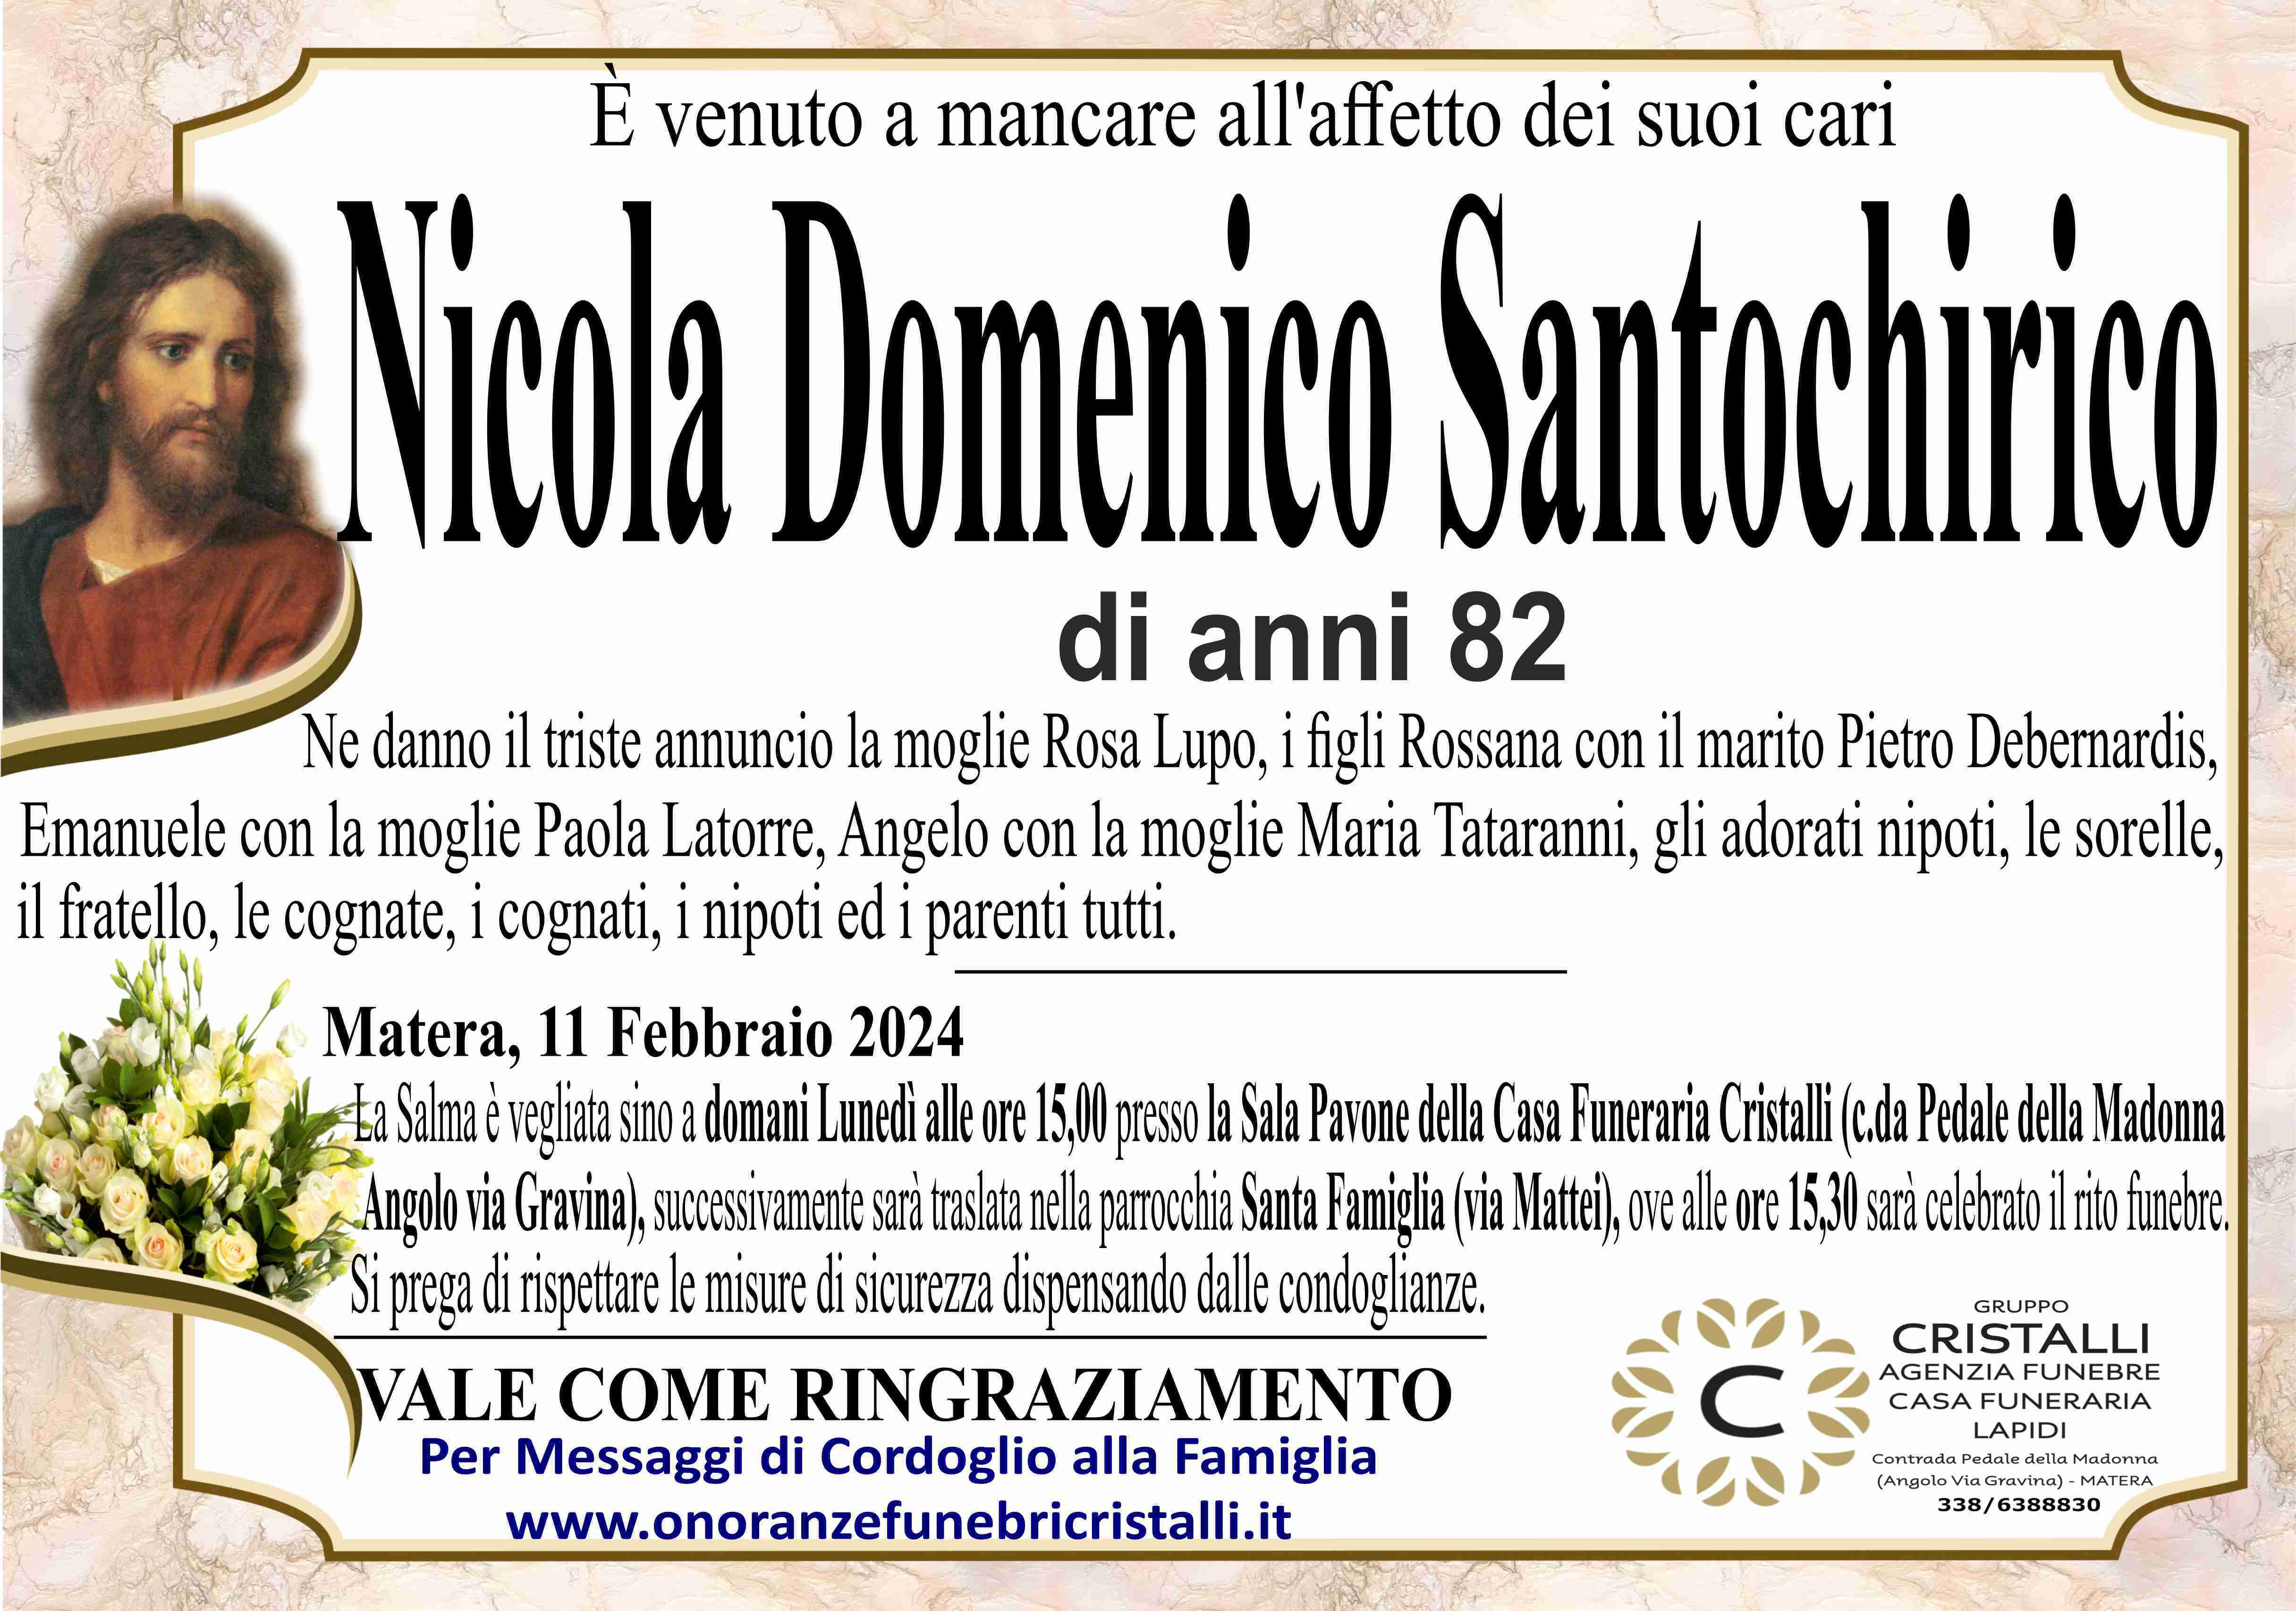 Nicola Domenico Santochirico